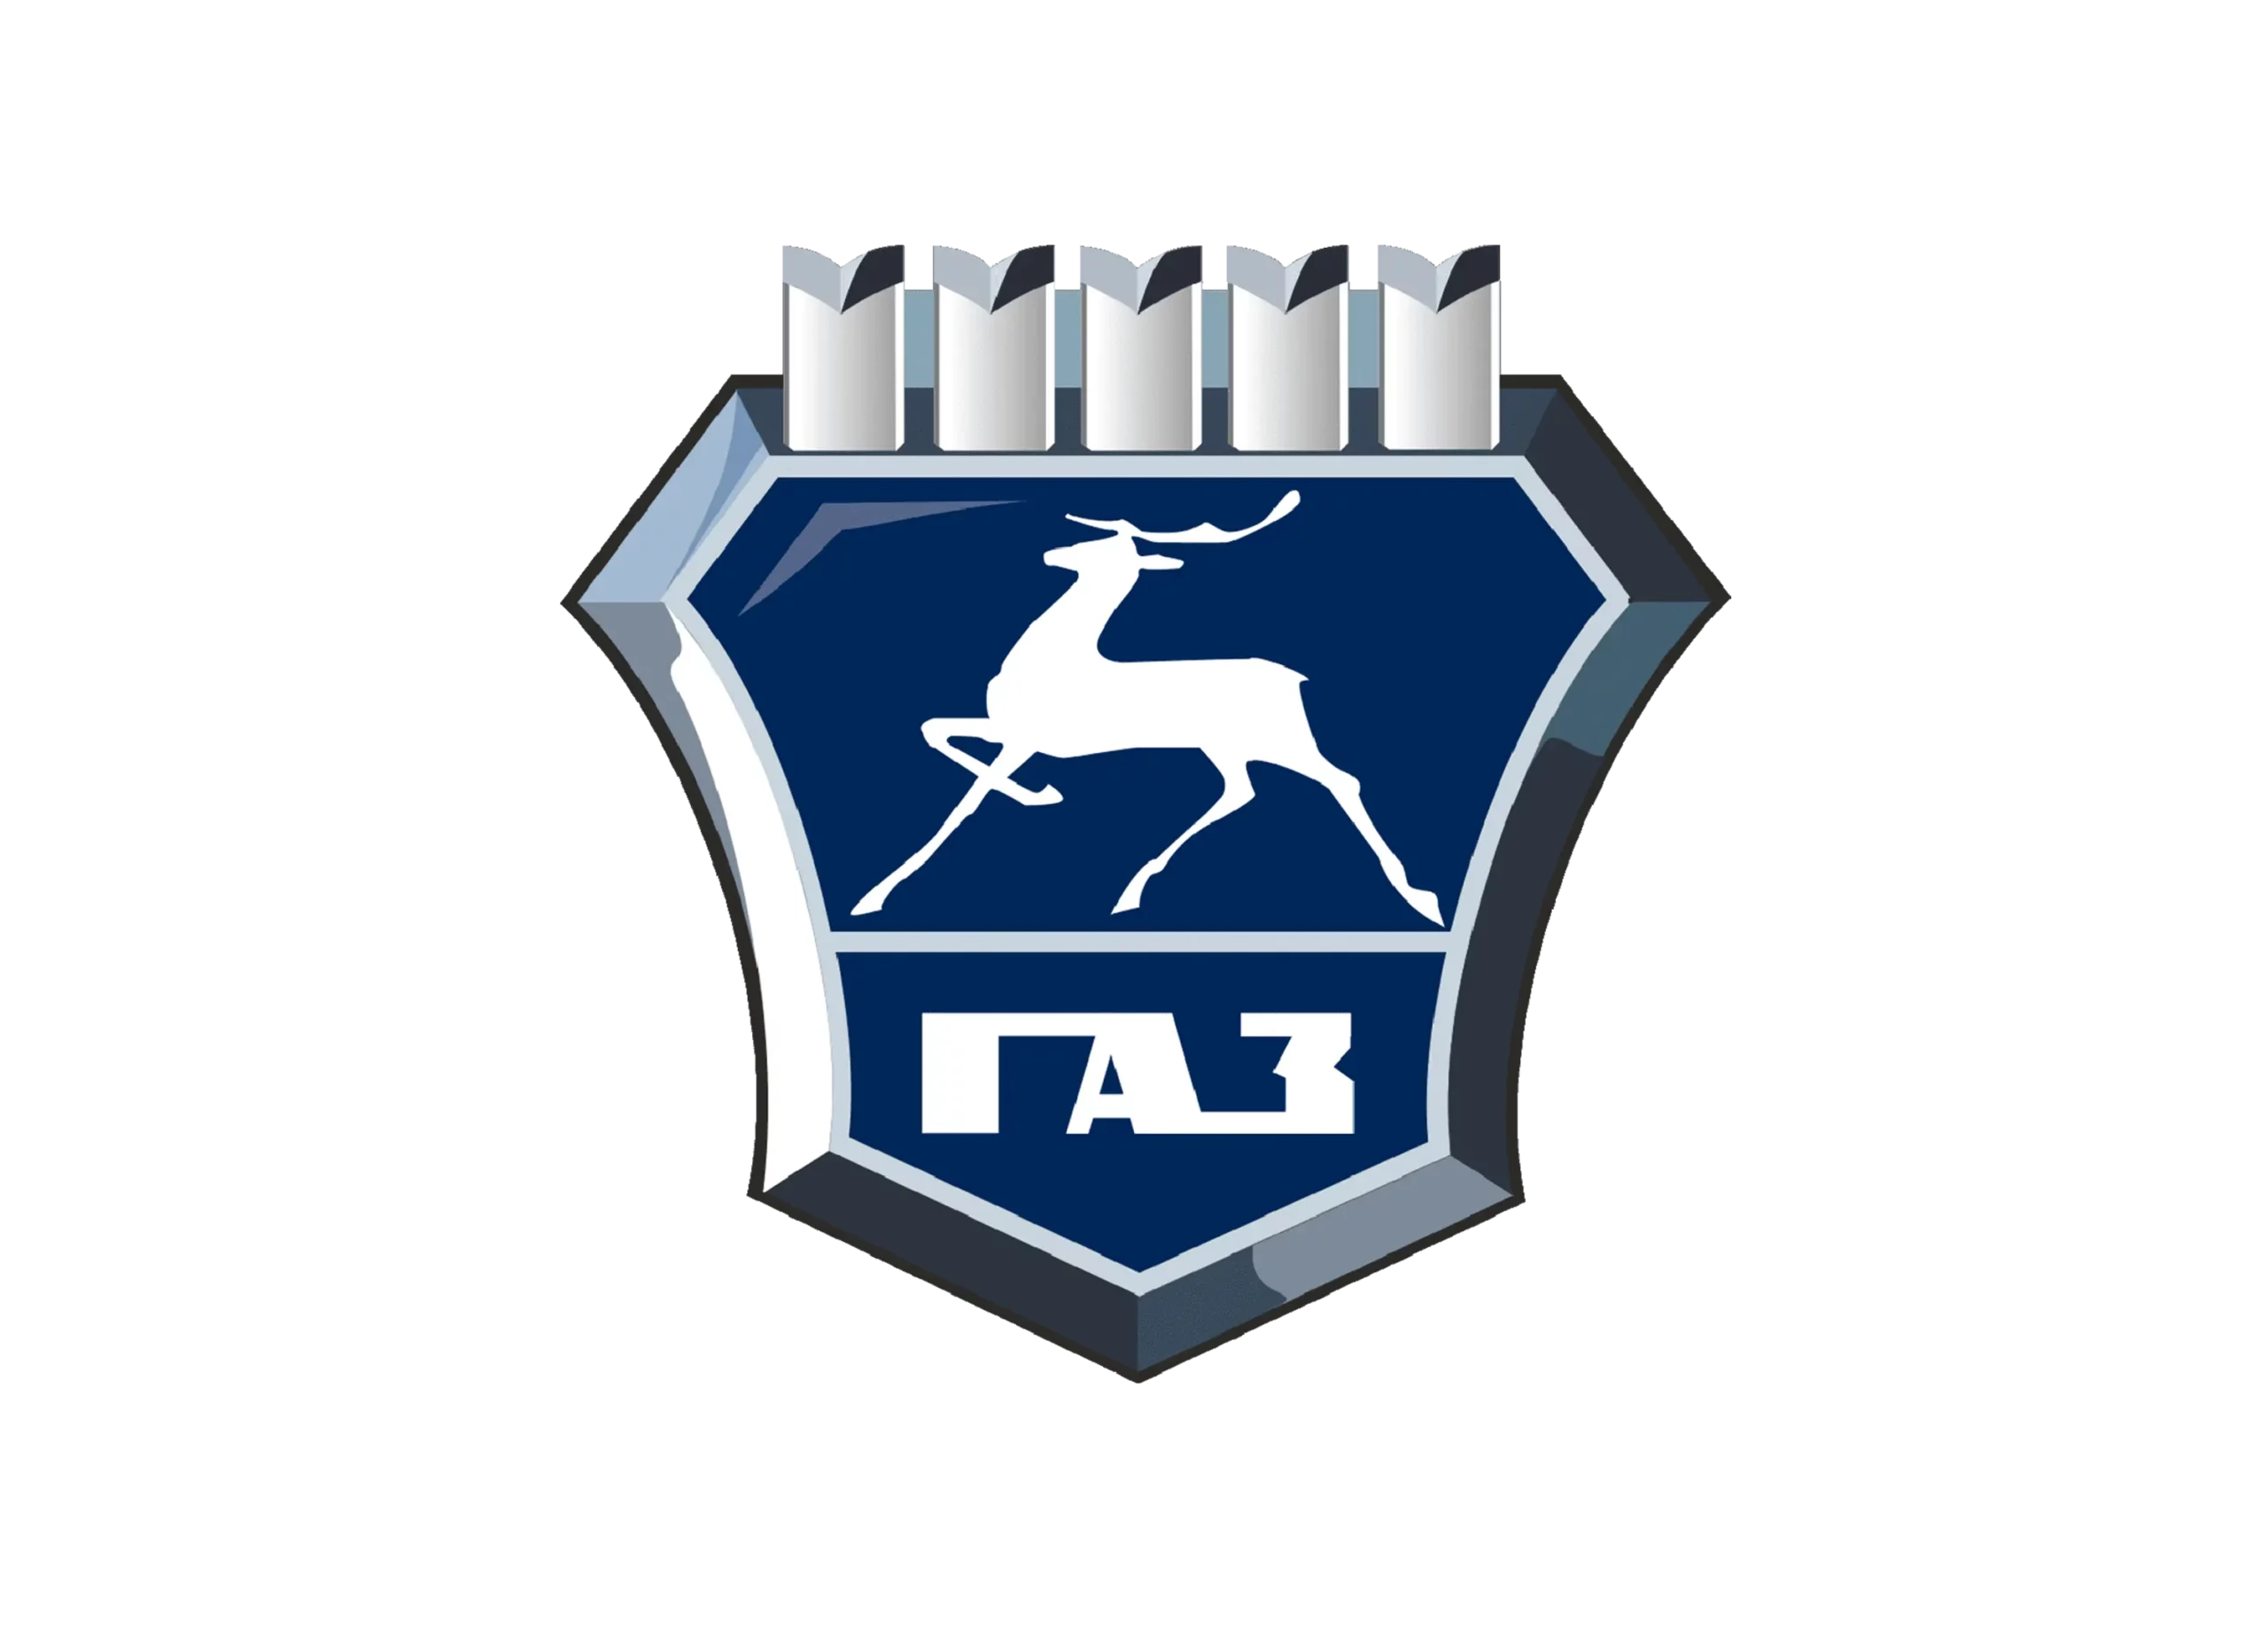 GAZ logo 1997-2015